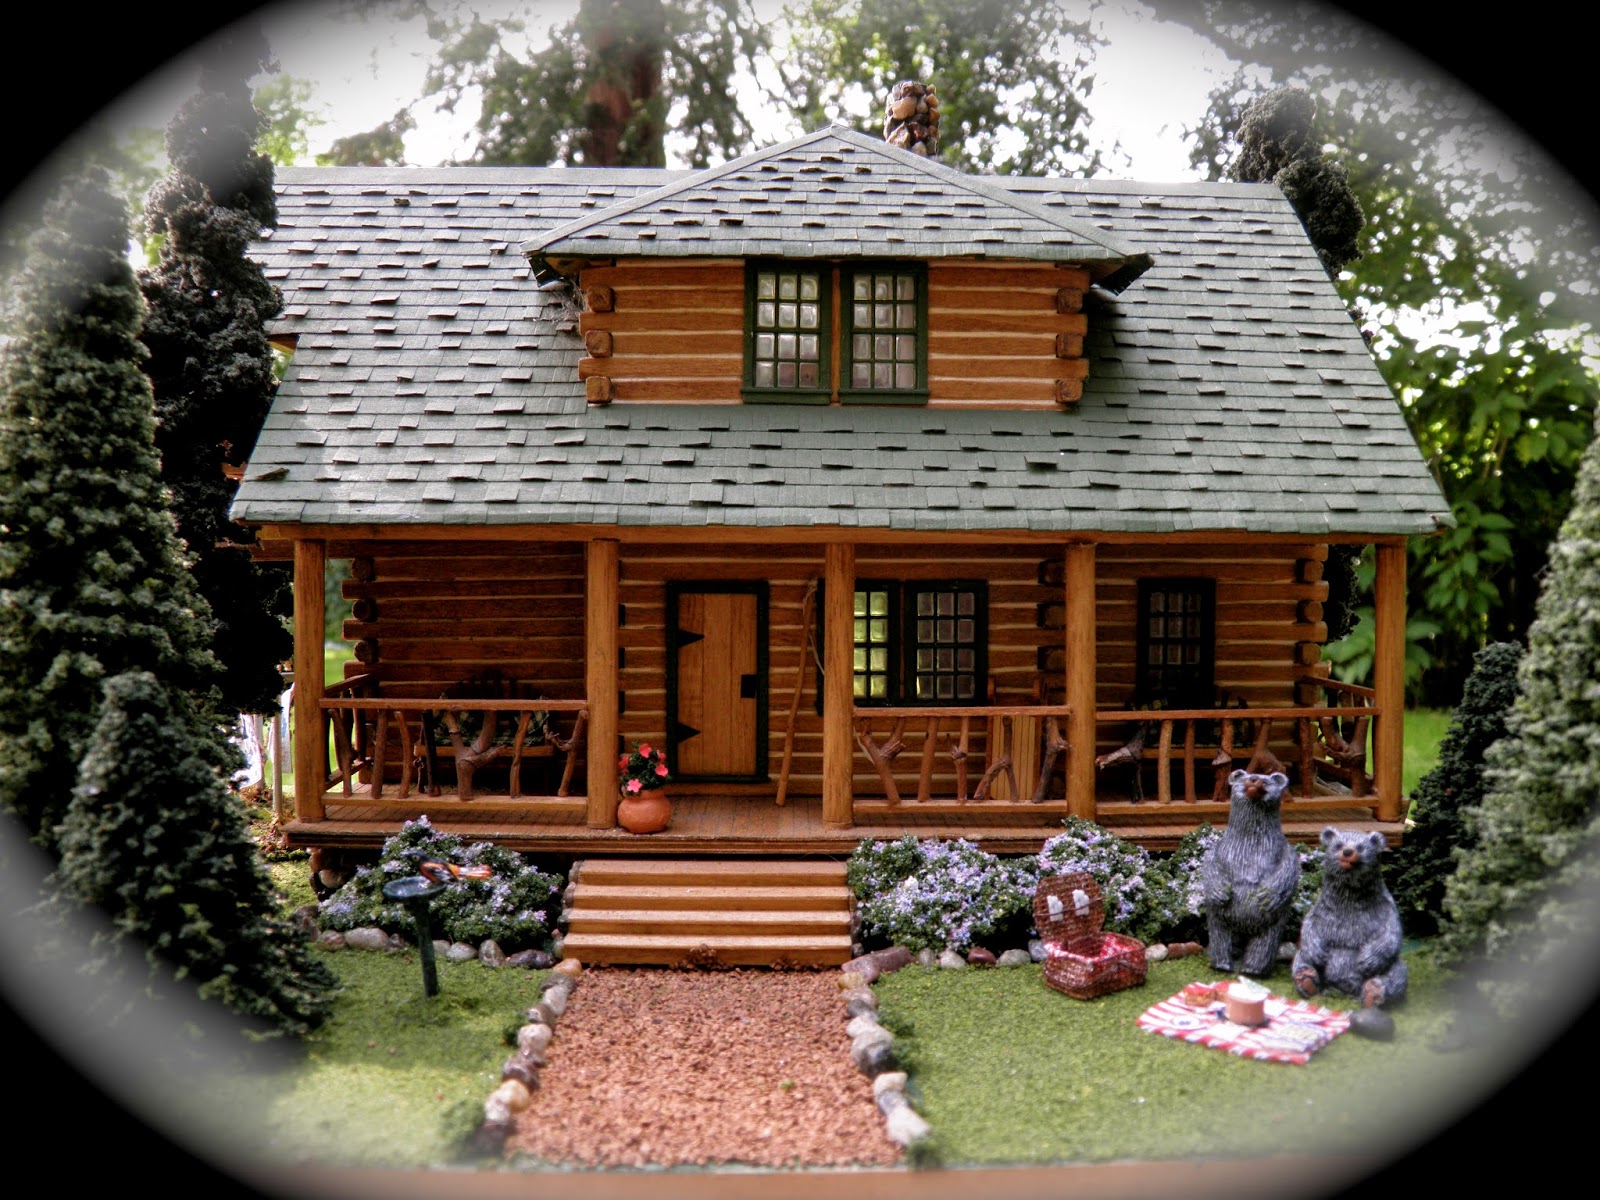 theweetinker: Jock's Cabin a miniature in quarter scale